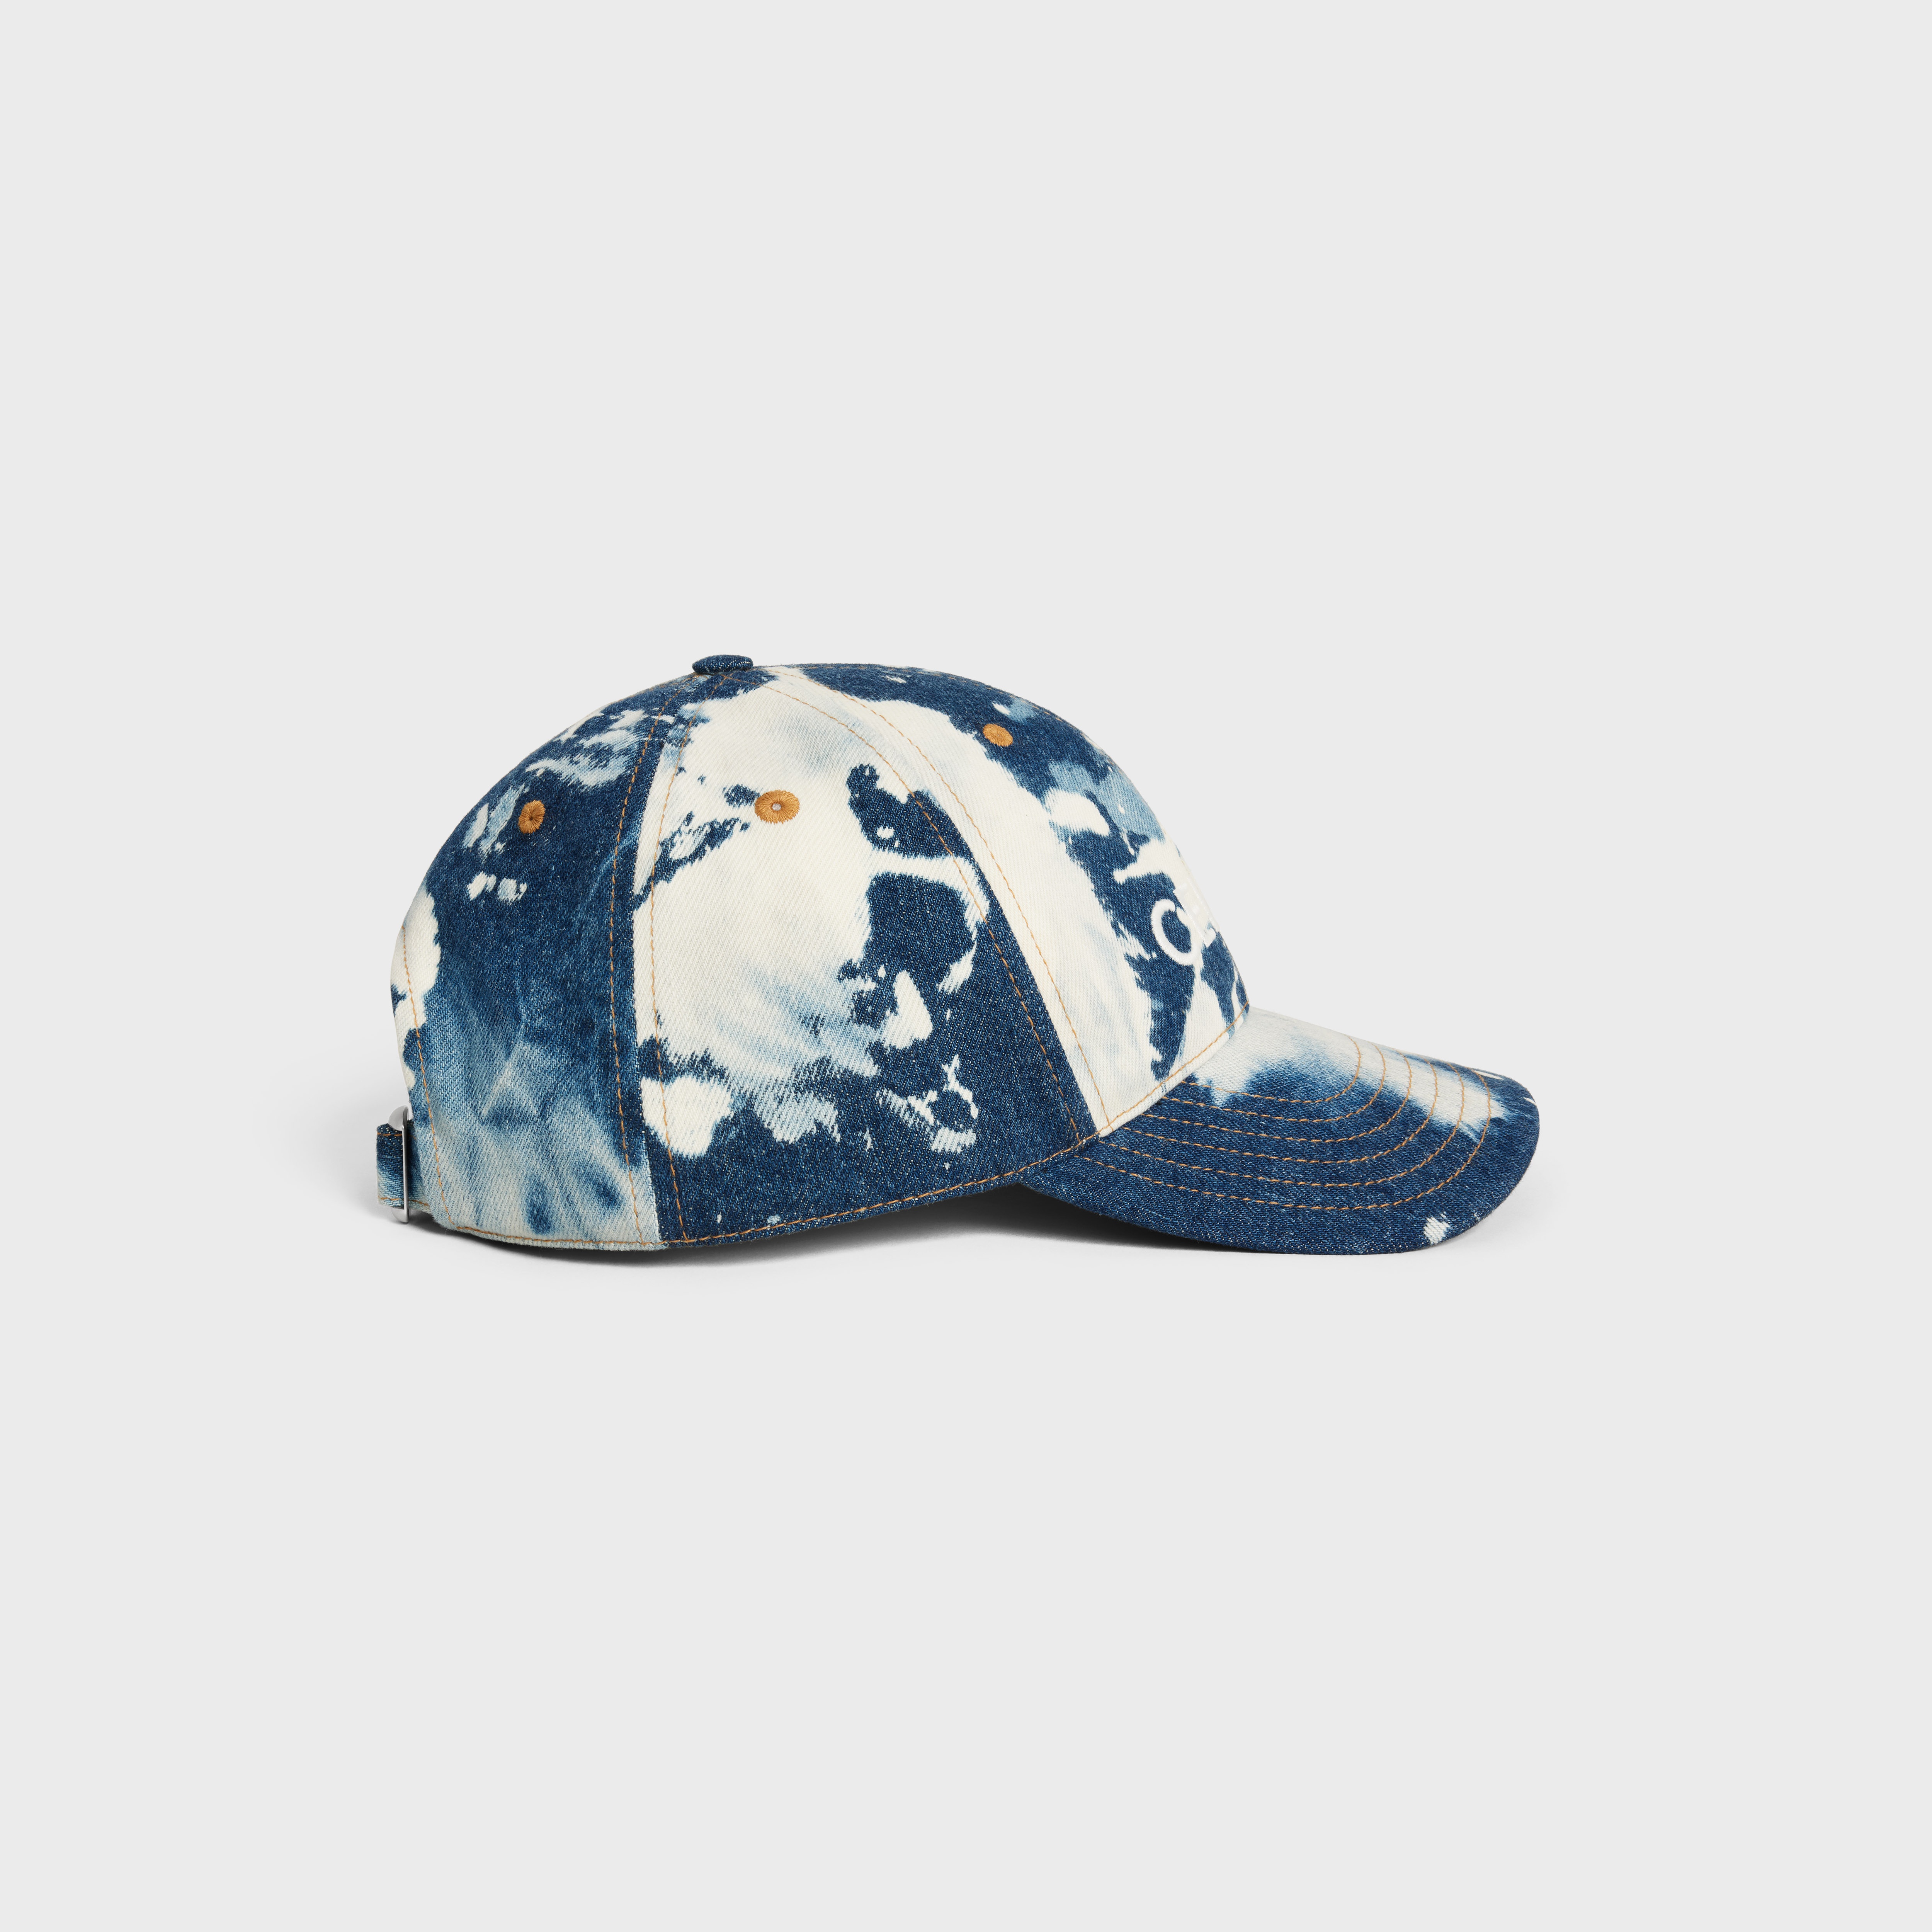 celine baseball cap in cotton and denim - 3